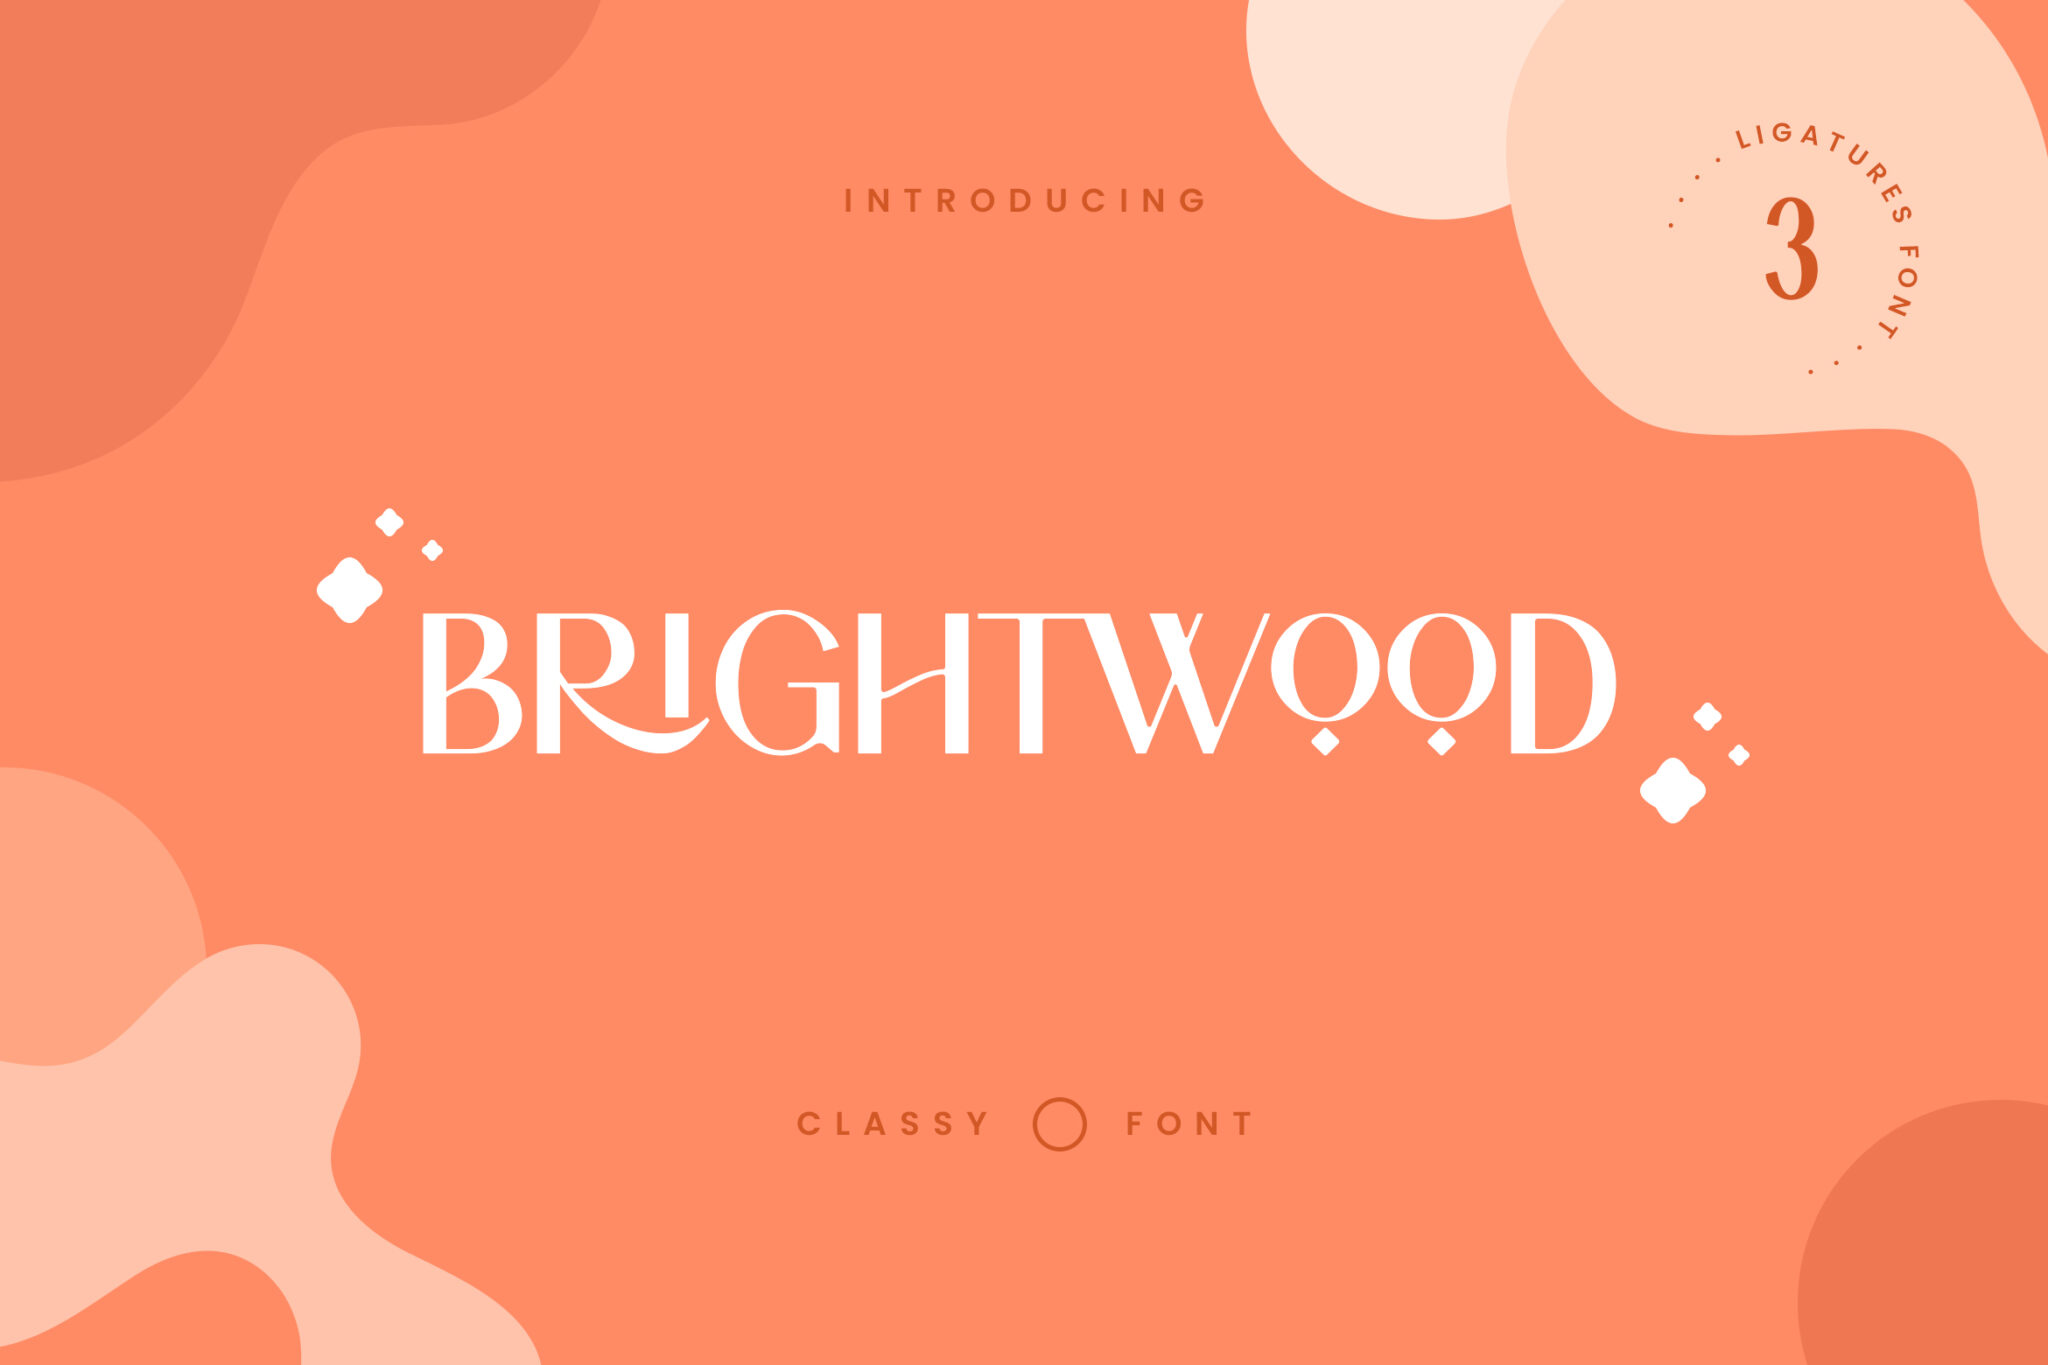 Brightwood